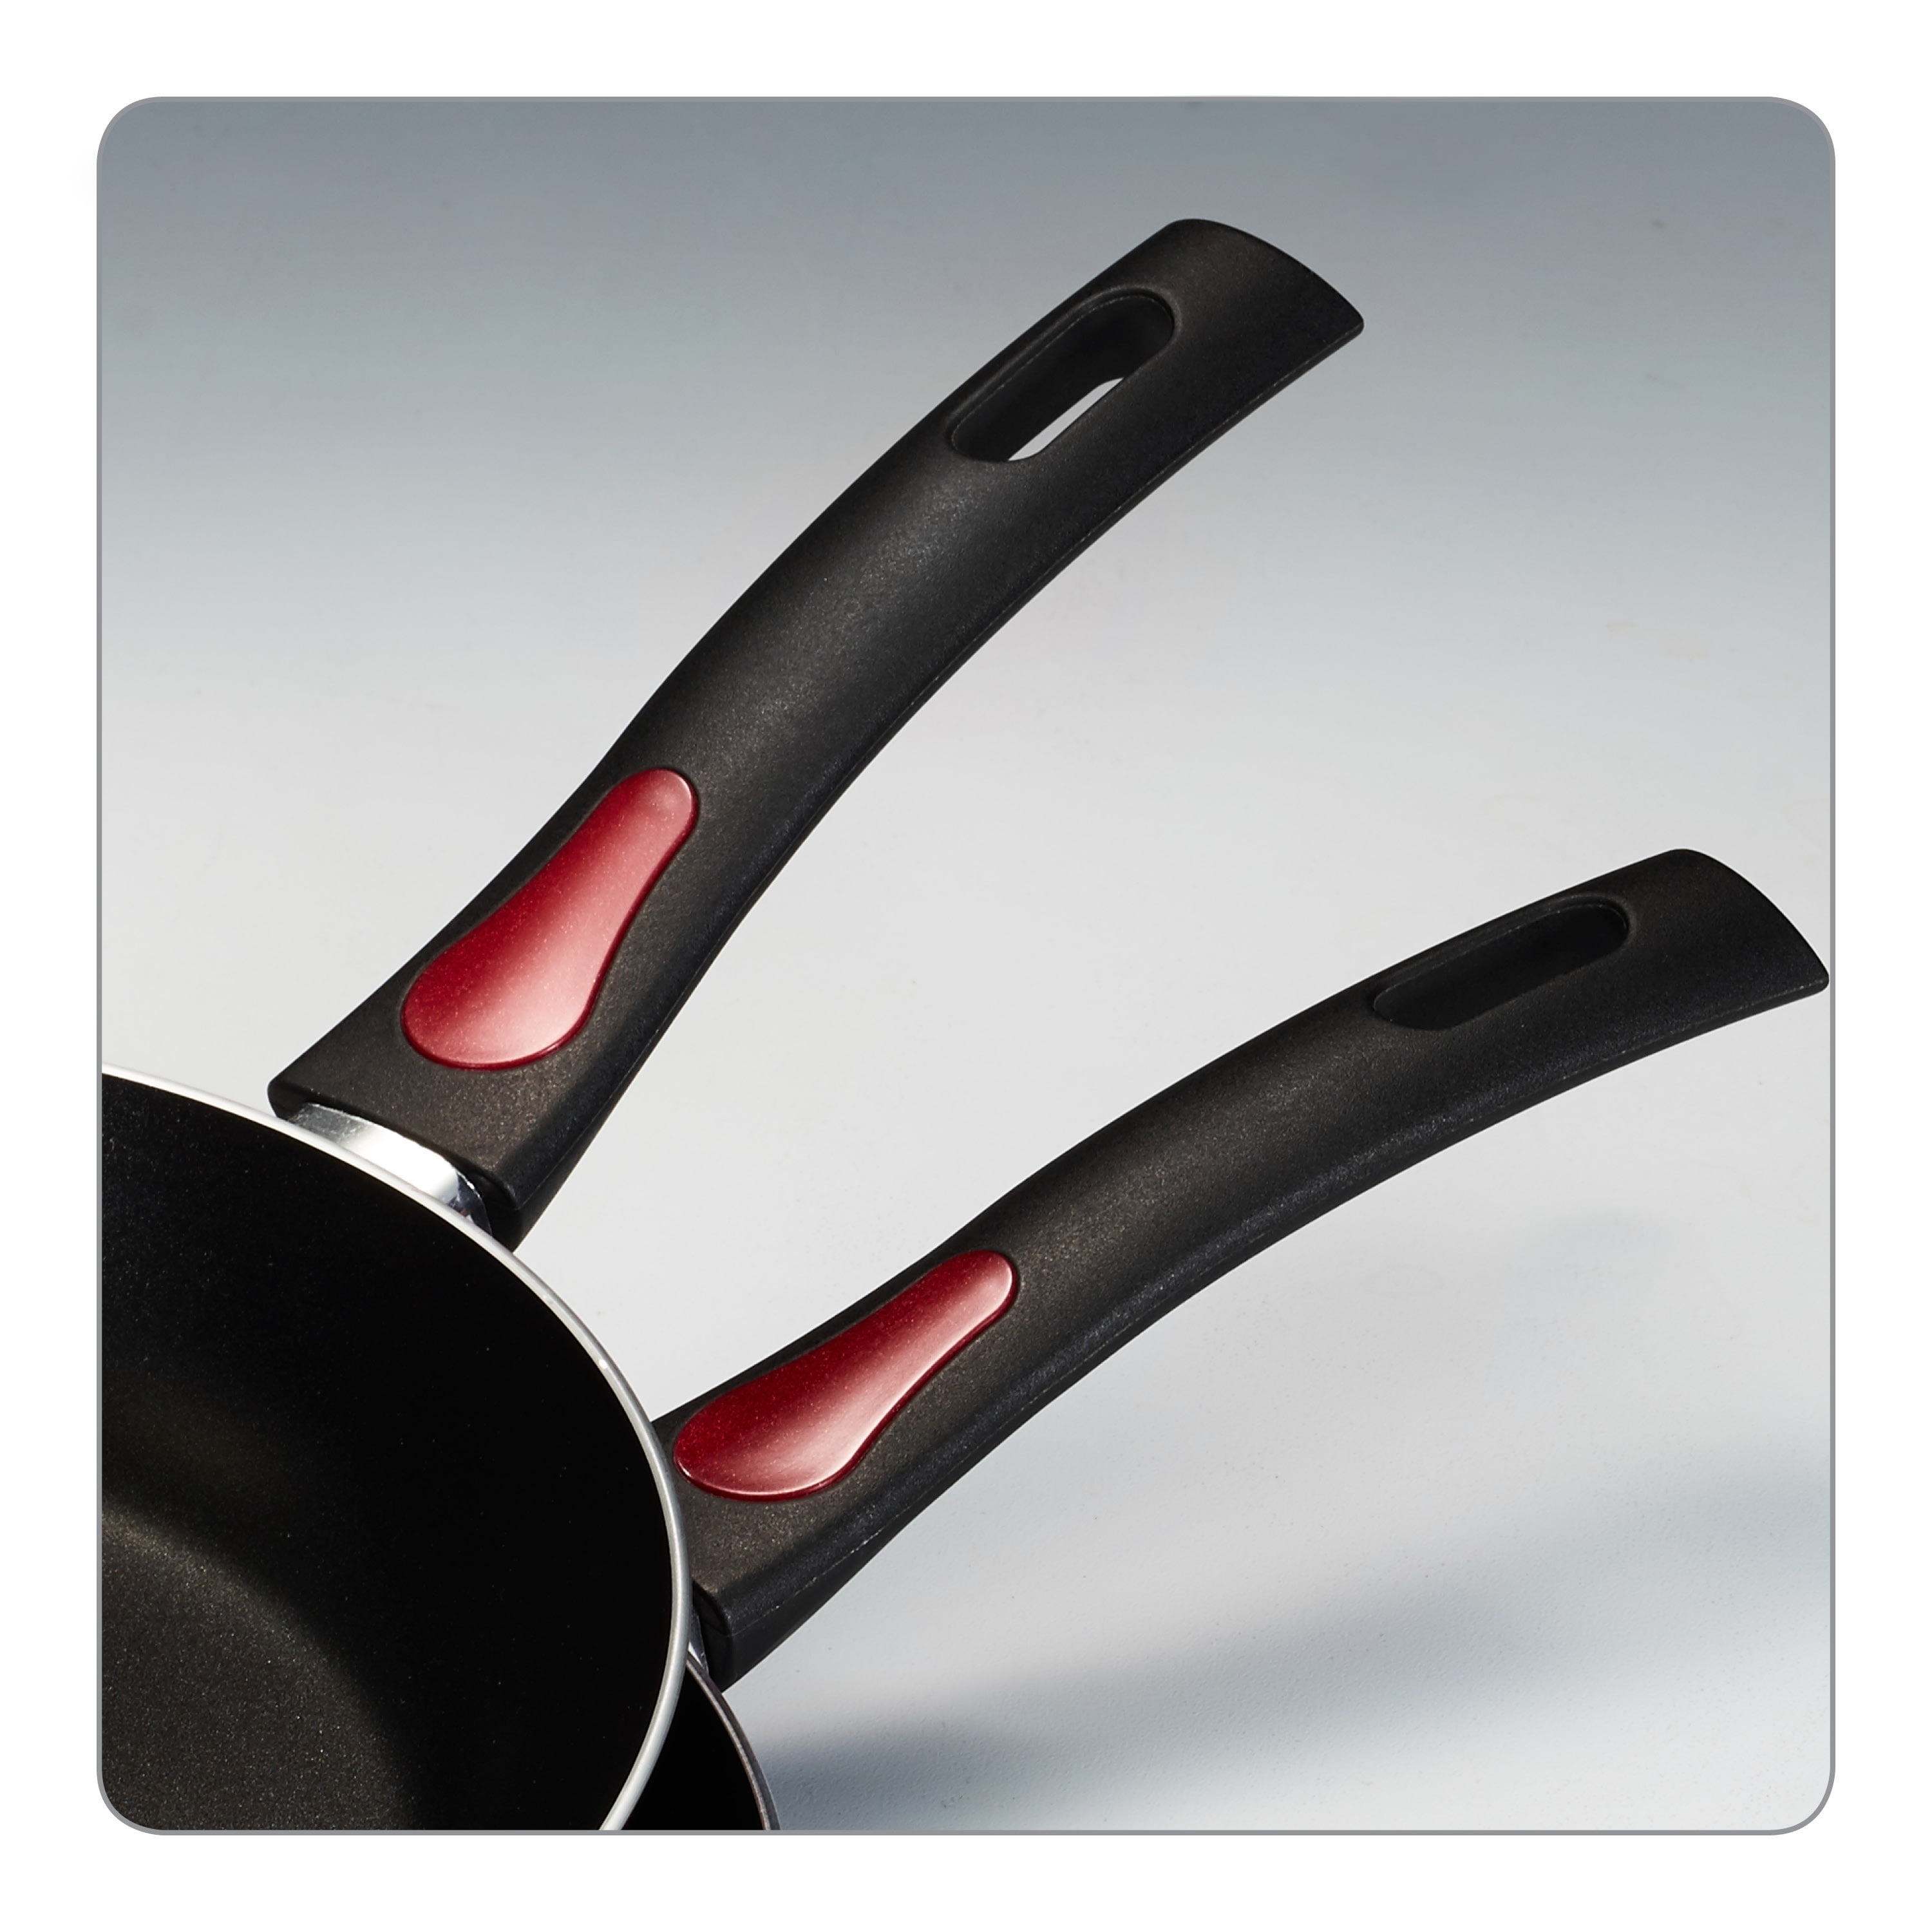 Tramontina Everyday 3 Pk Aluminum Nonstick Fry Pans – Metallic Red